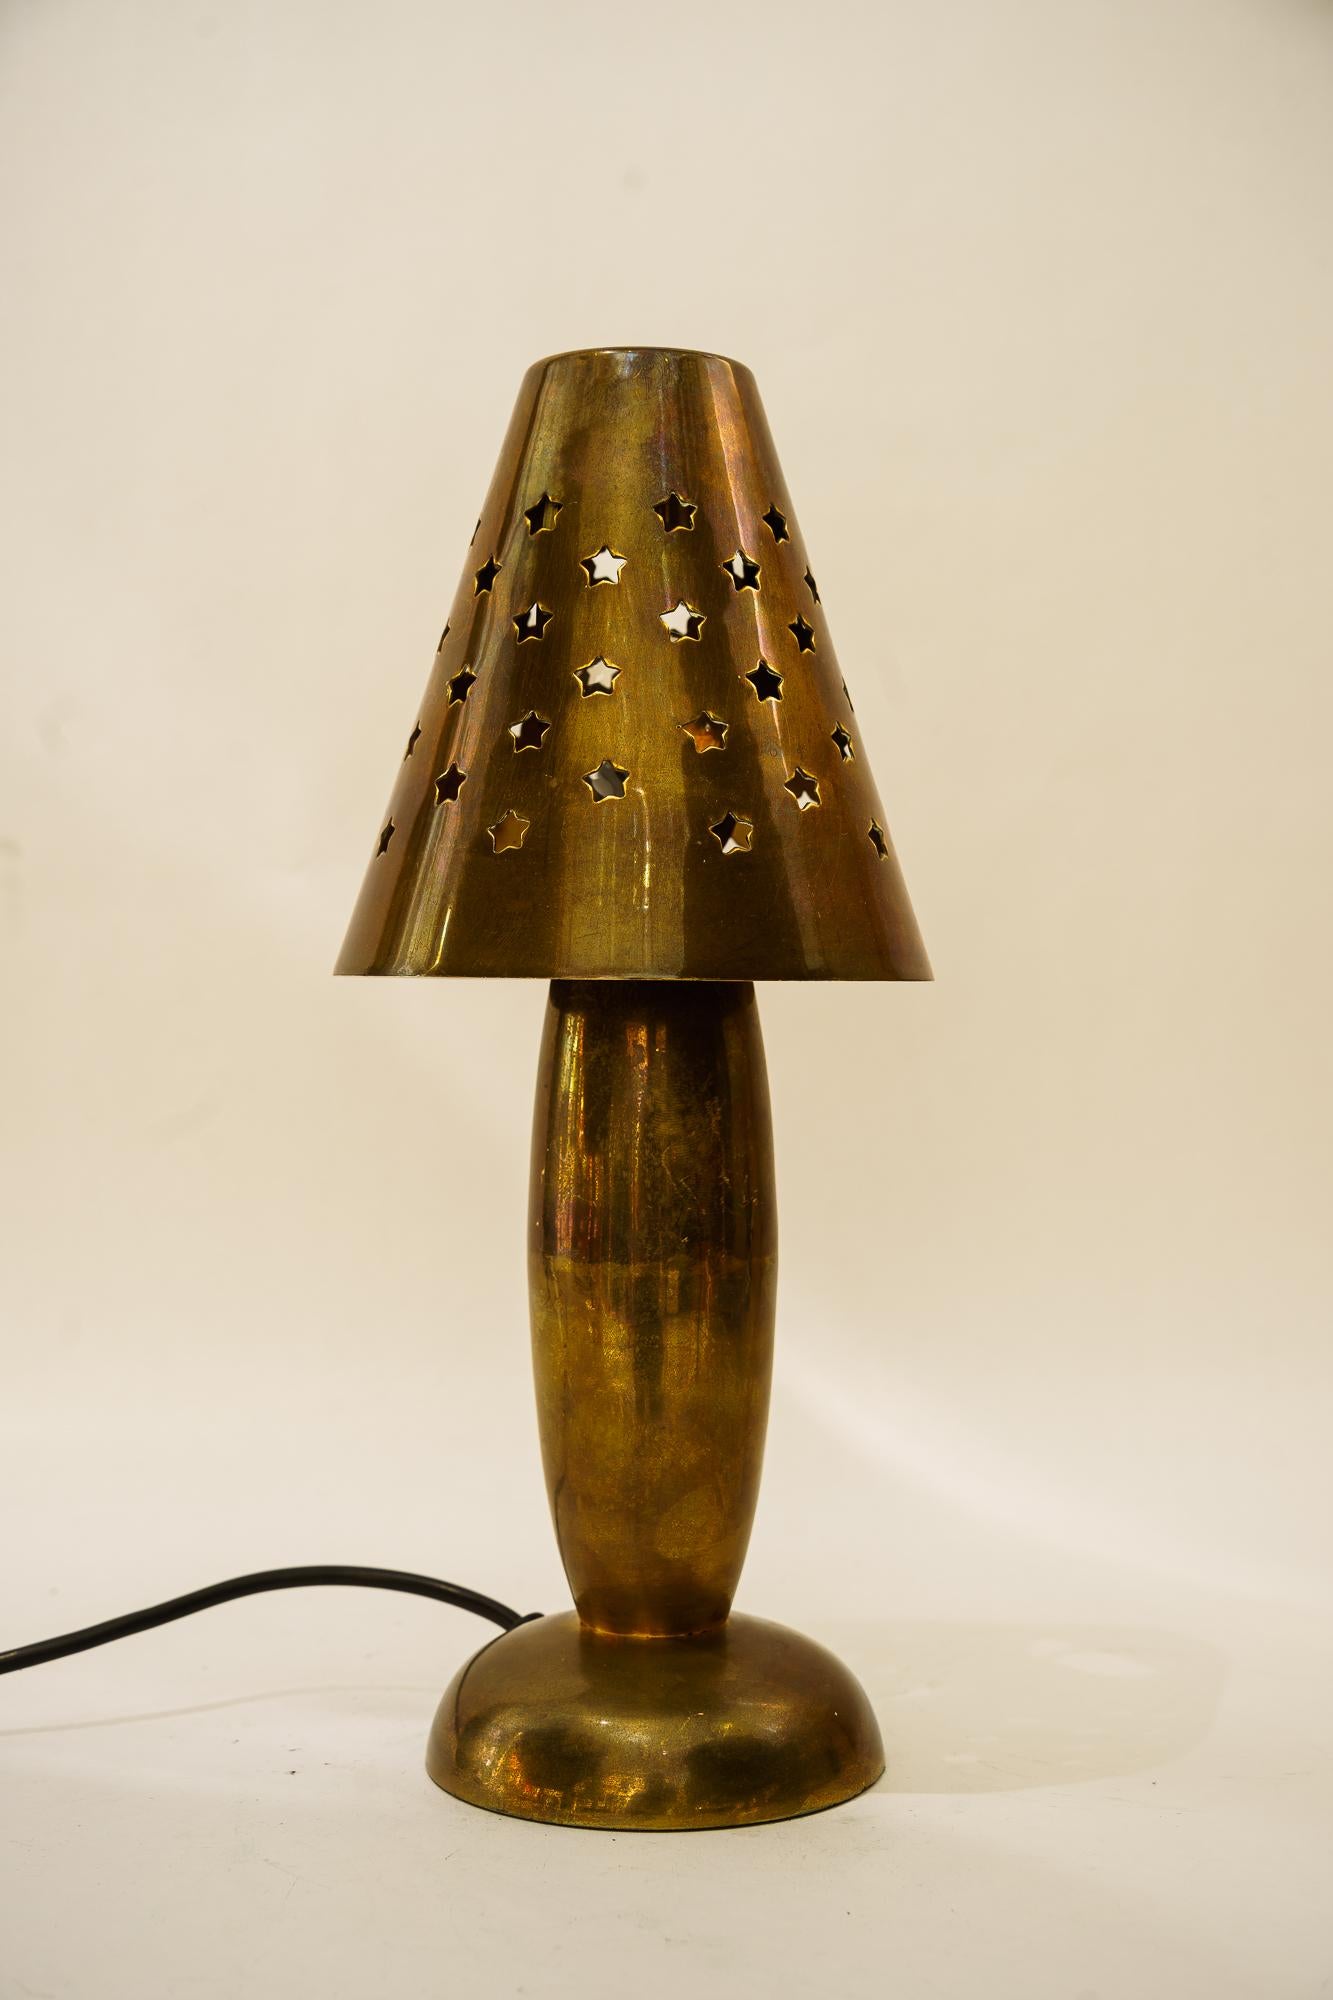 Vintage brass table lamp vienna around 1960s
Brass original condition
Original patina